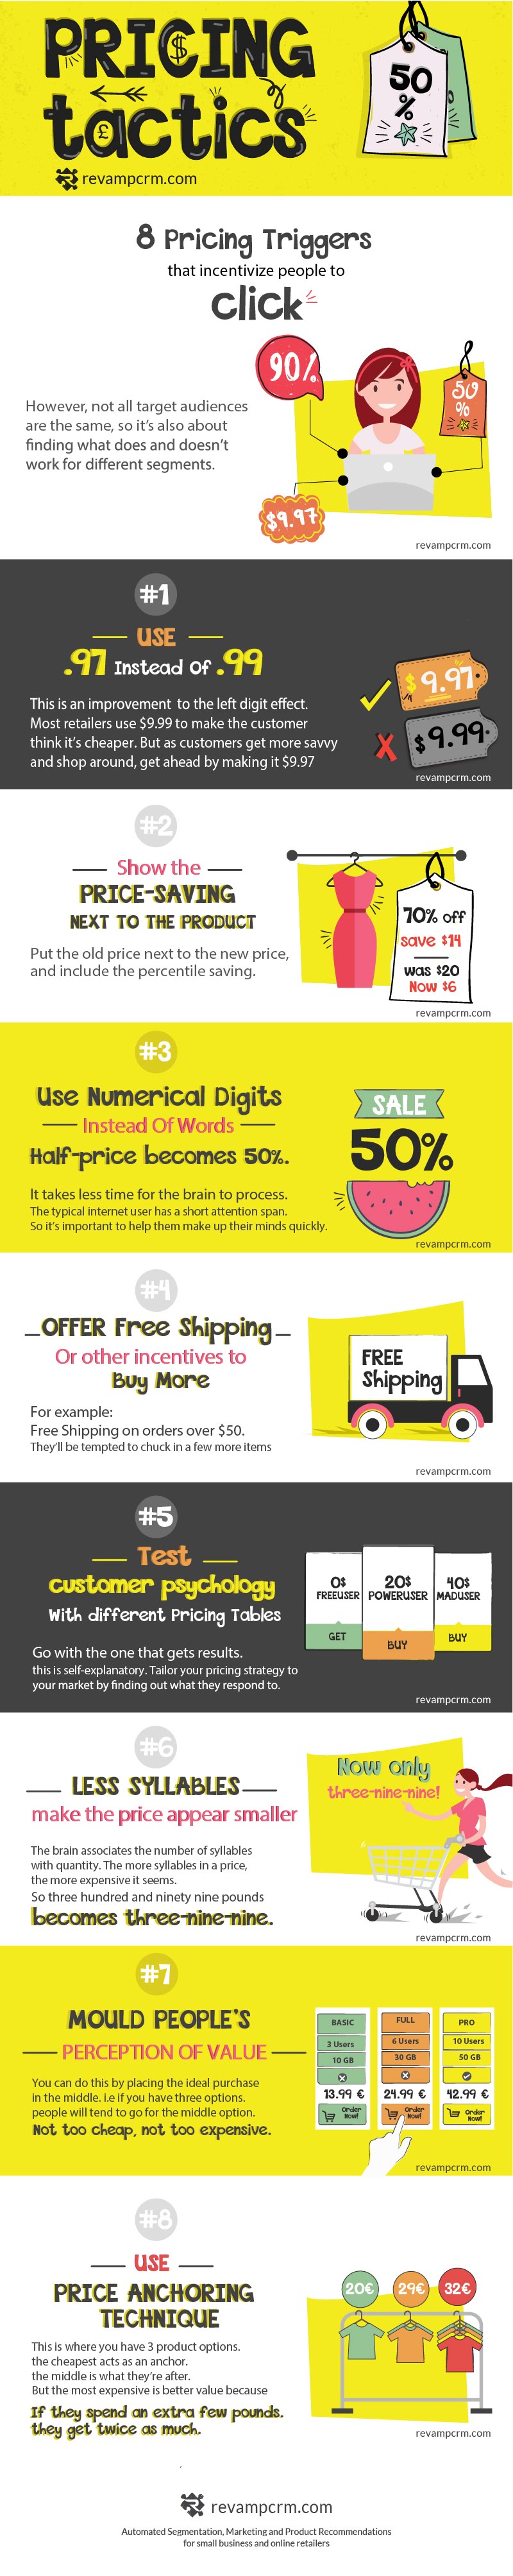 Pricing Tactics - #Infographic